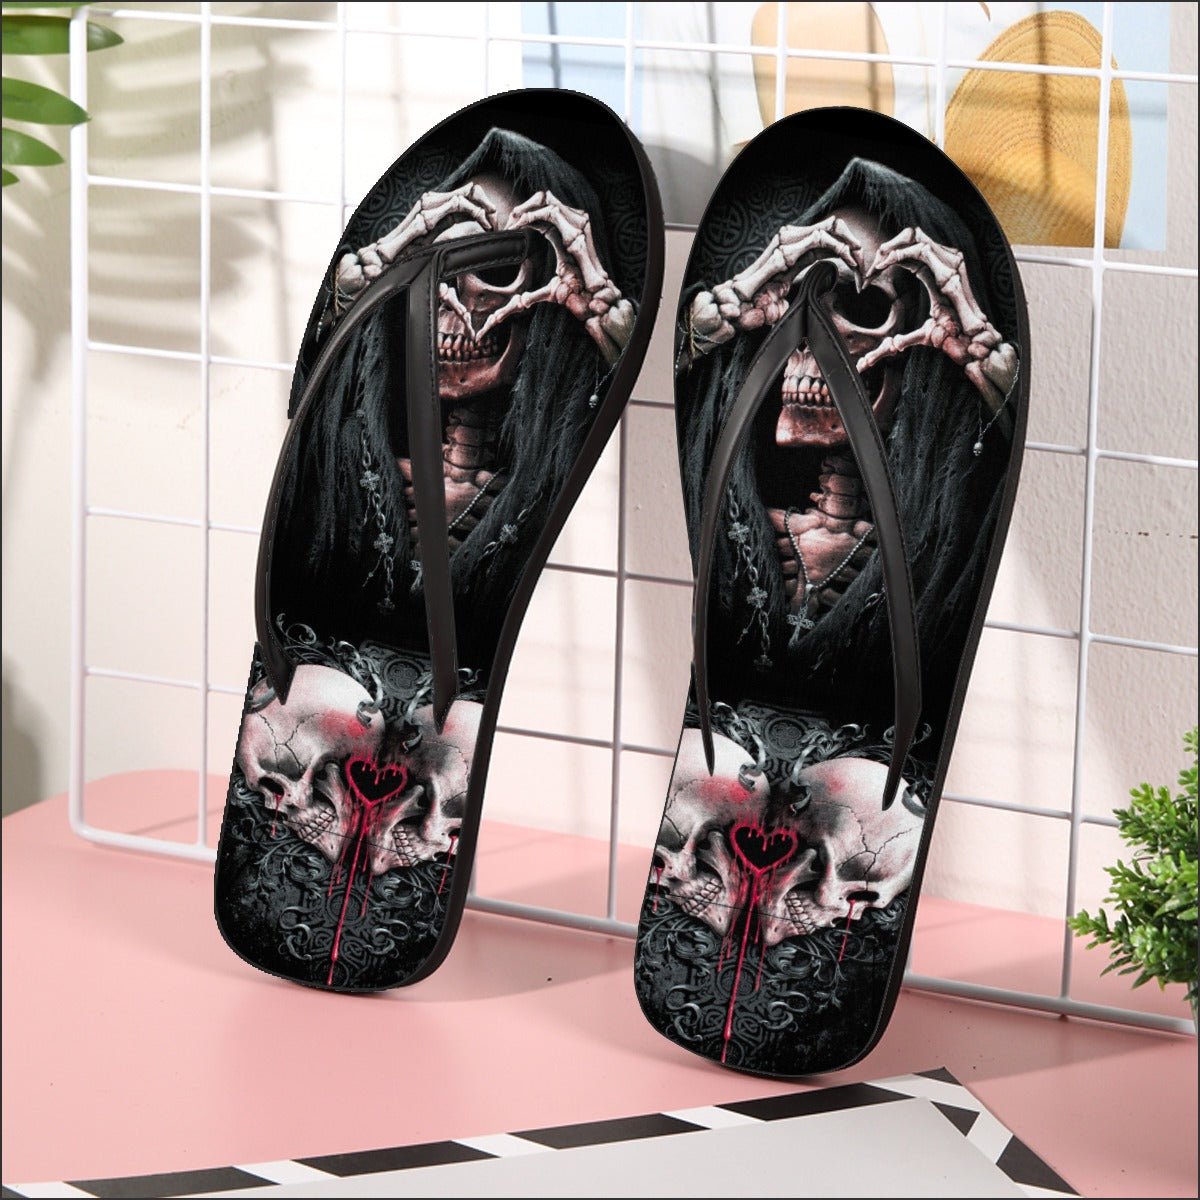 Grim reaper heart Women's Flip Flops, Gothic skeleton women's flip flops sandals shoes